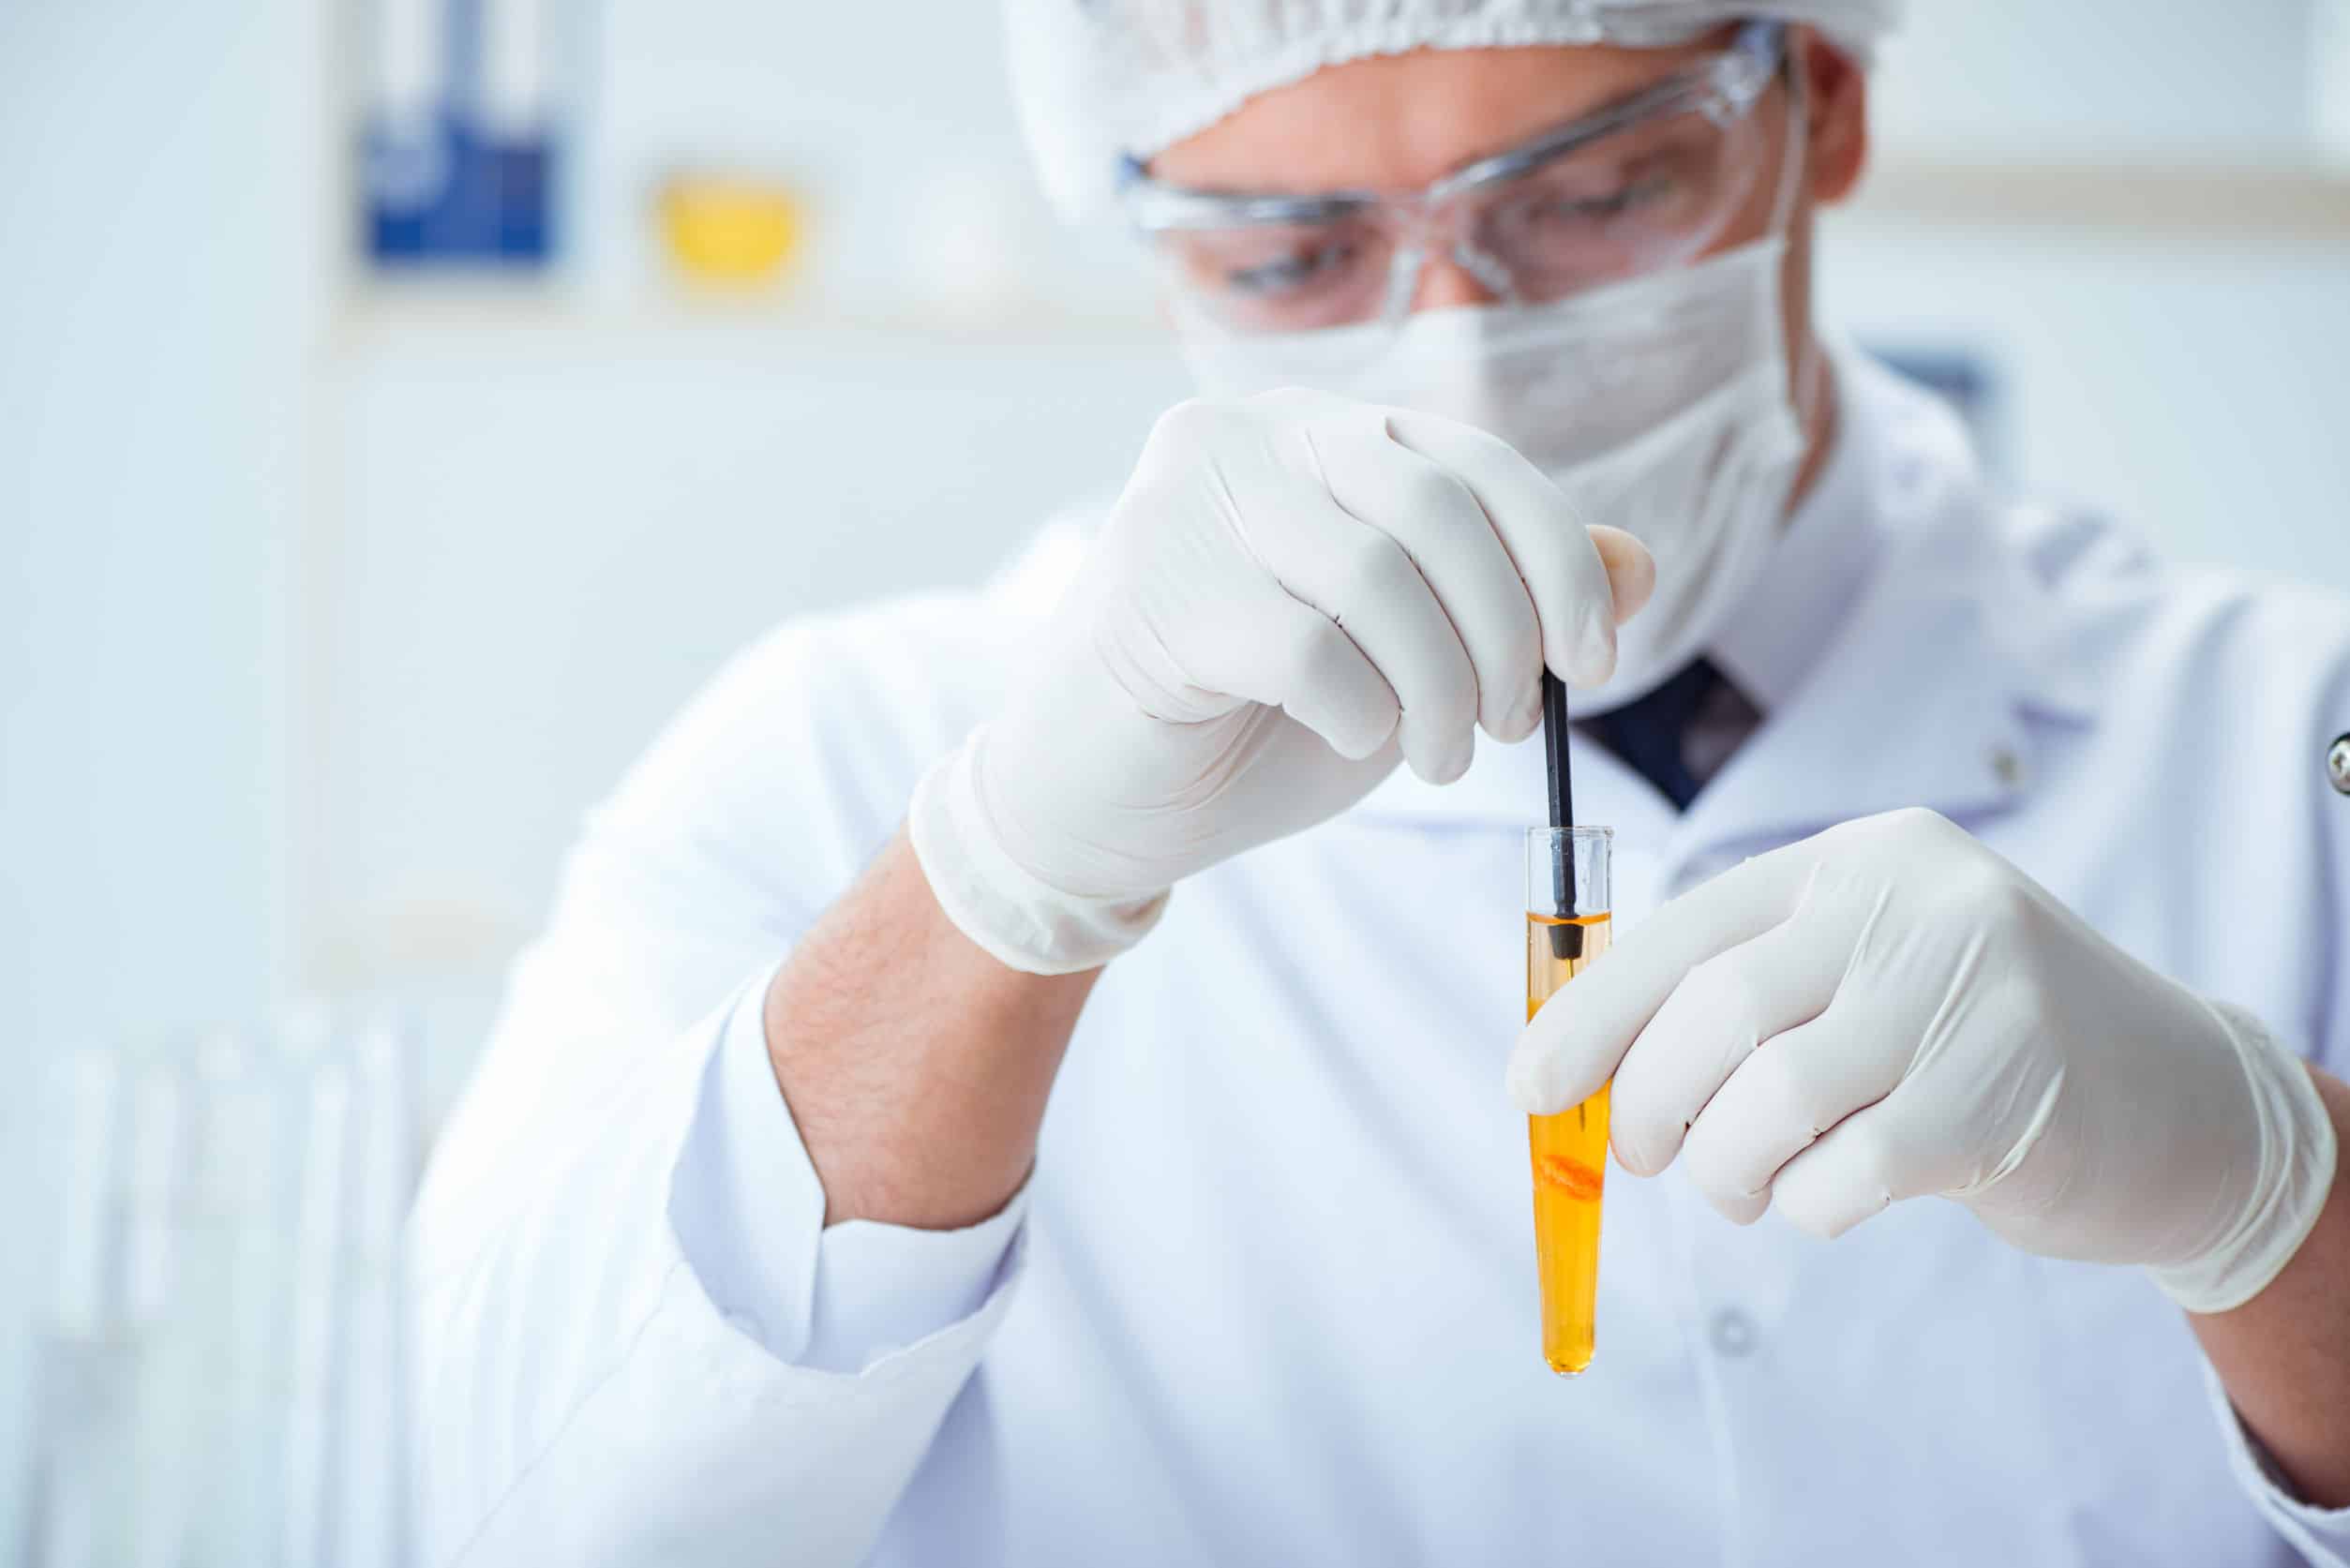 quest diagnostics employer drug testing reddit